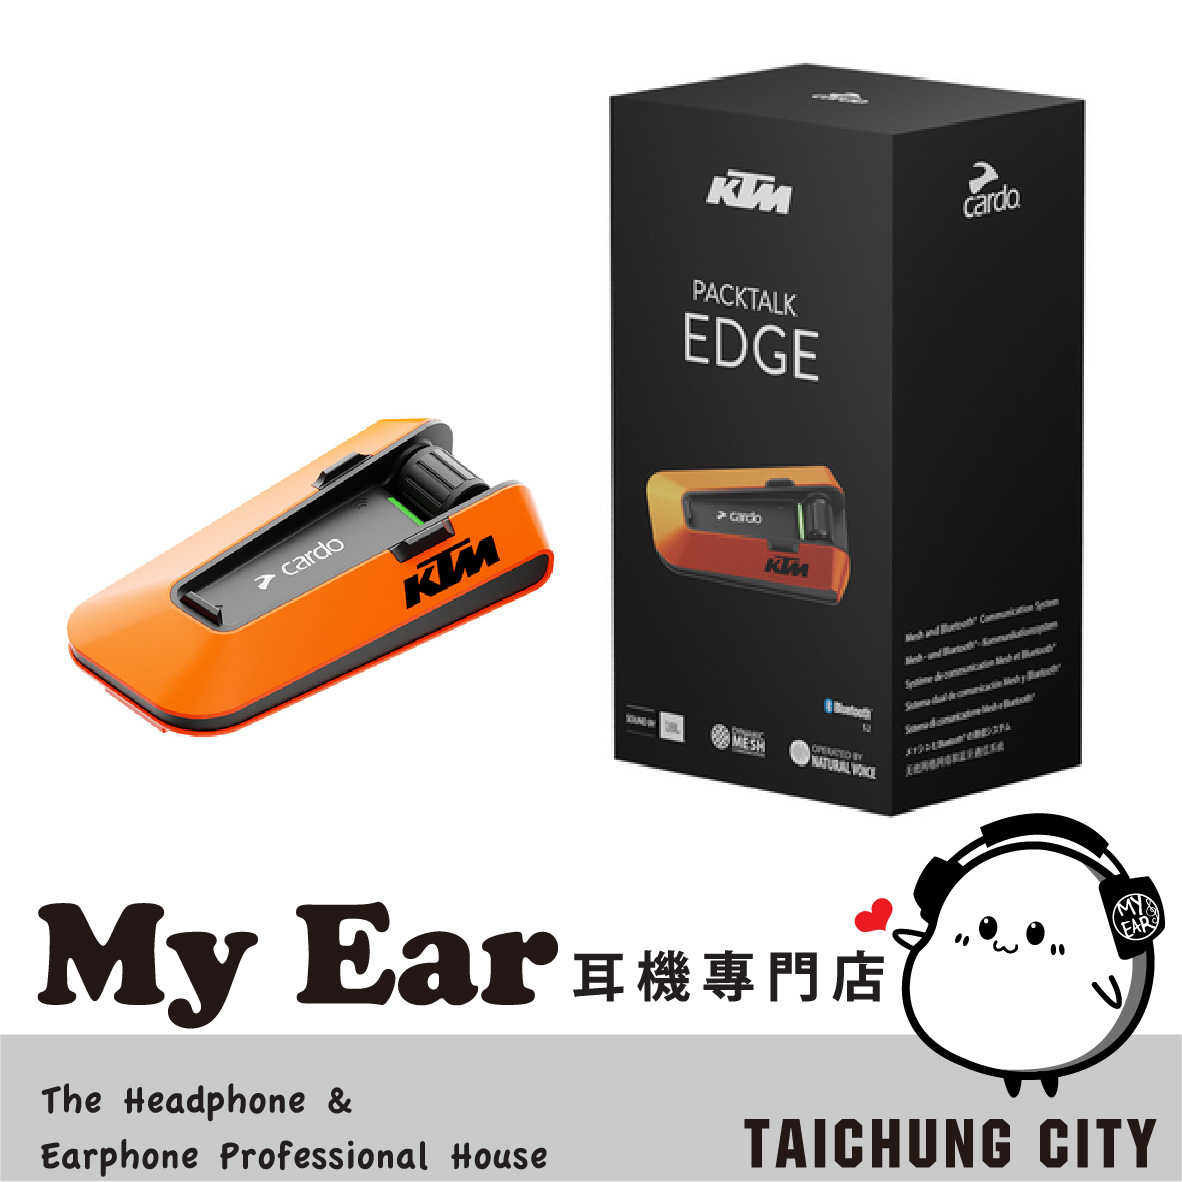 Cardo PACKTALK EDGE 安全帽通訊 藍牙耳機 KTM聯名 | MY Ear 耳機專賣店